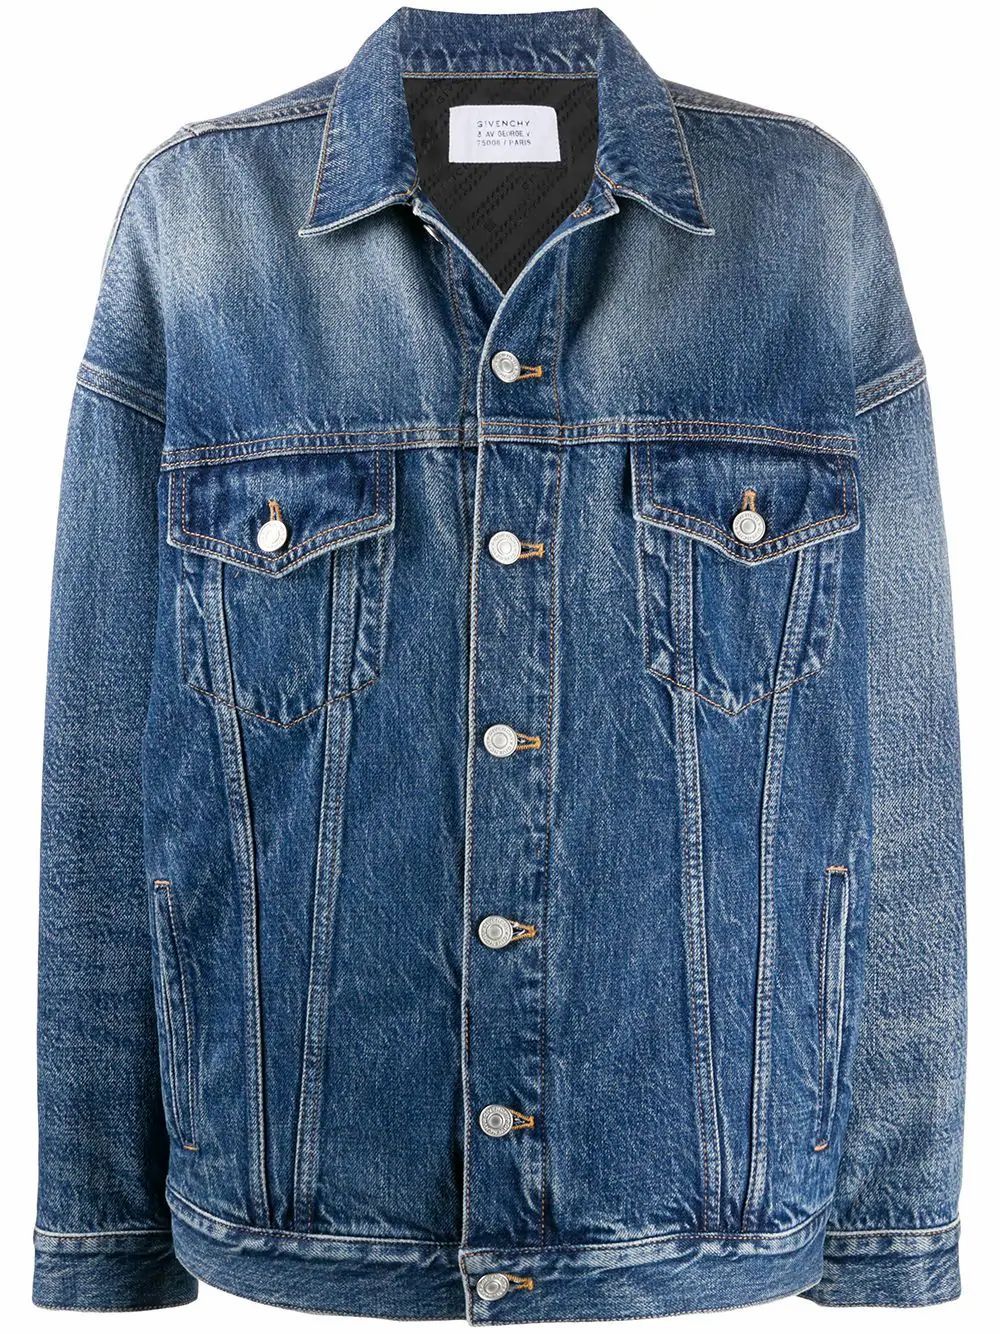 Givenchy Women's BW00Ab50Jq415 Blue Cotton Jacket